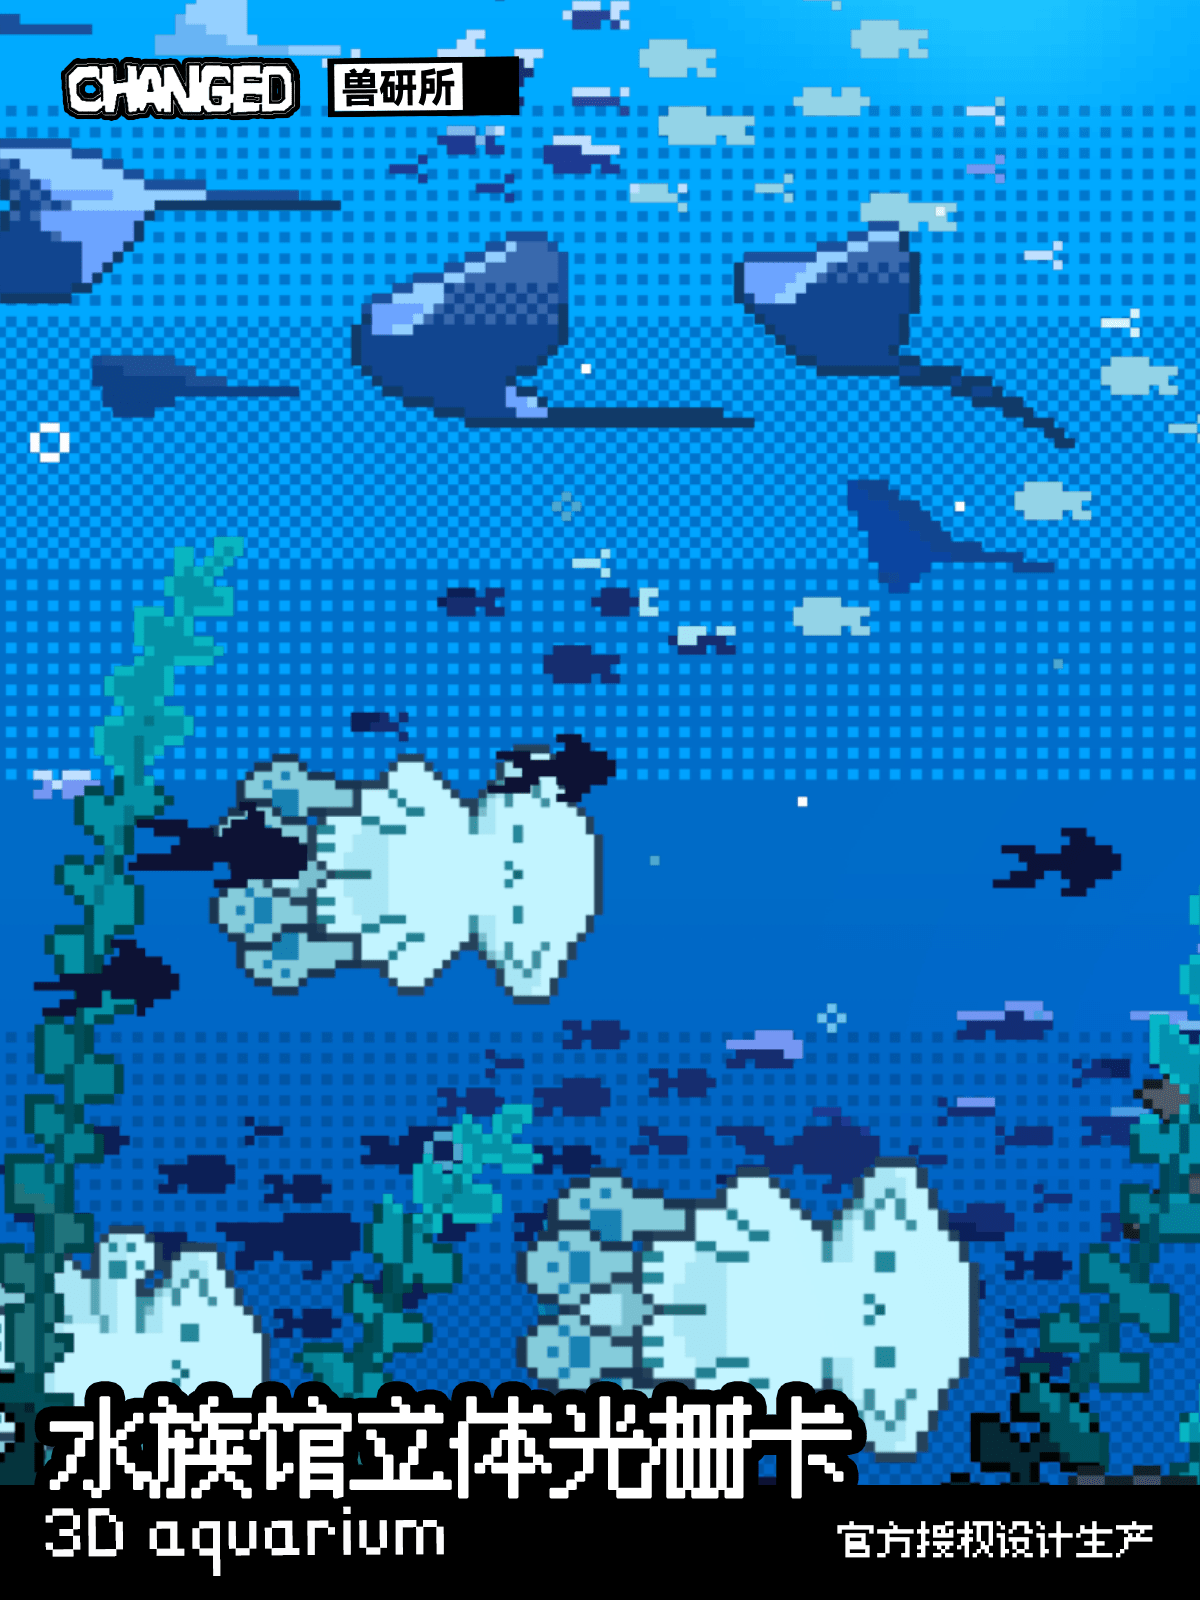 Changed Aquarium 3D Lenticular Card Furyy 34574:463185